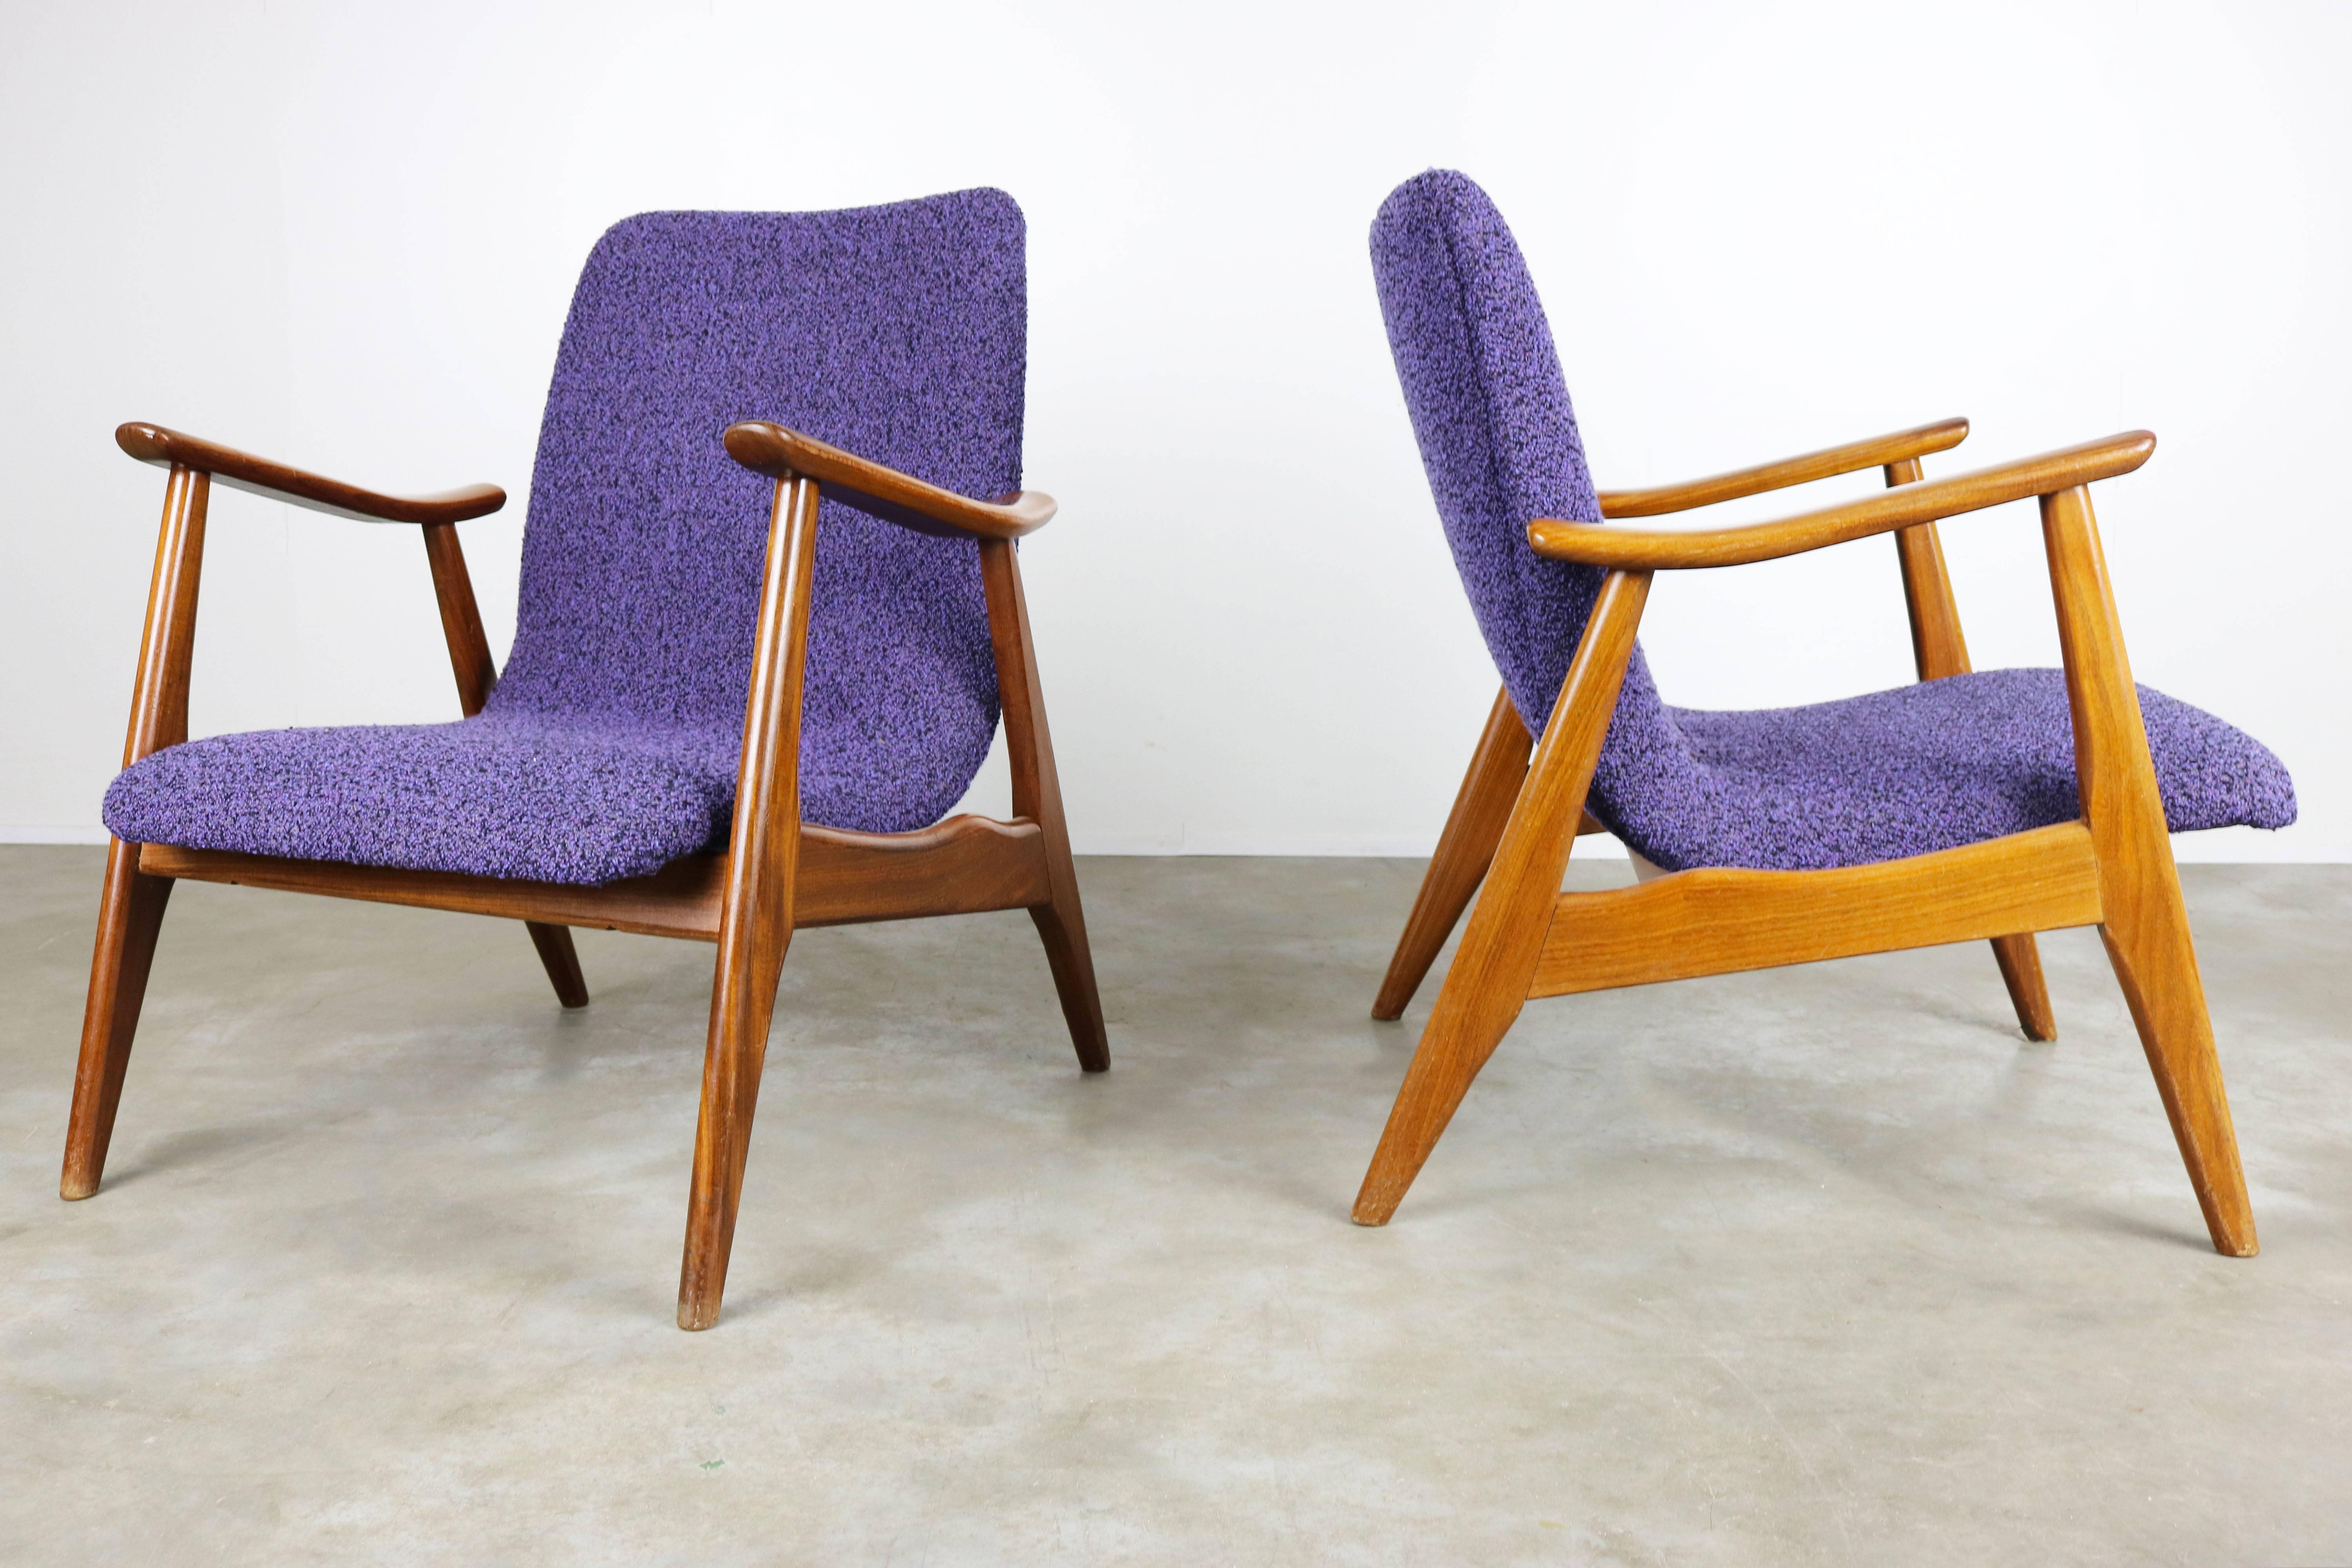 Mid-20th Century Set of Two Teak Lounge Chairs by Louis Van Teeffelen for Webe 1960 Brown Purple